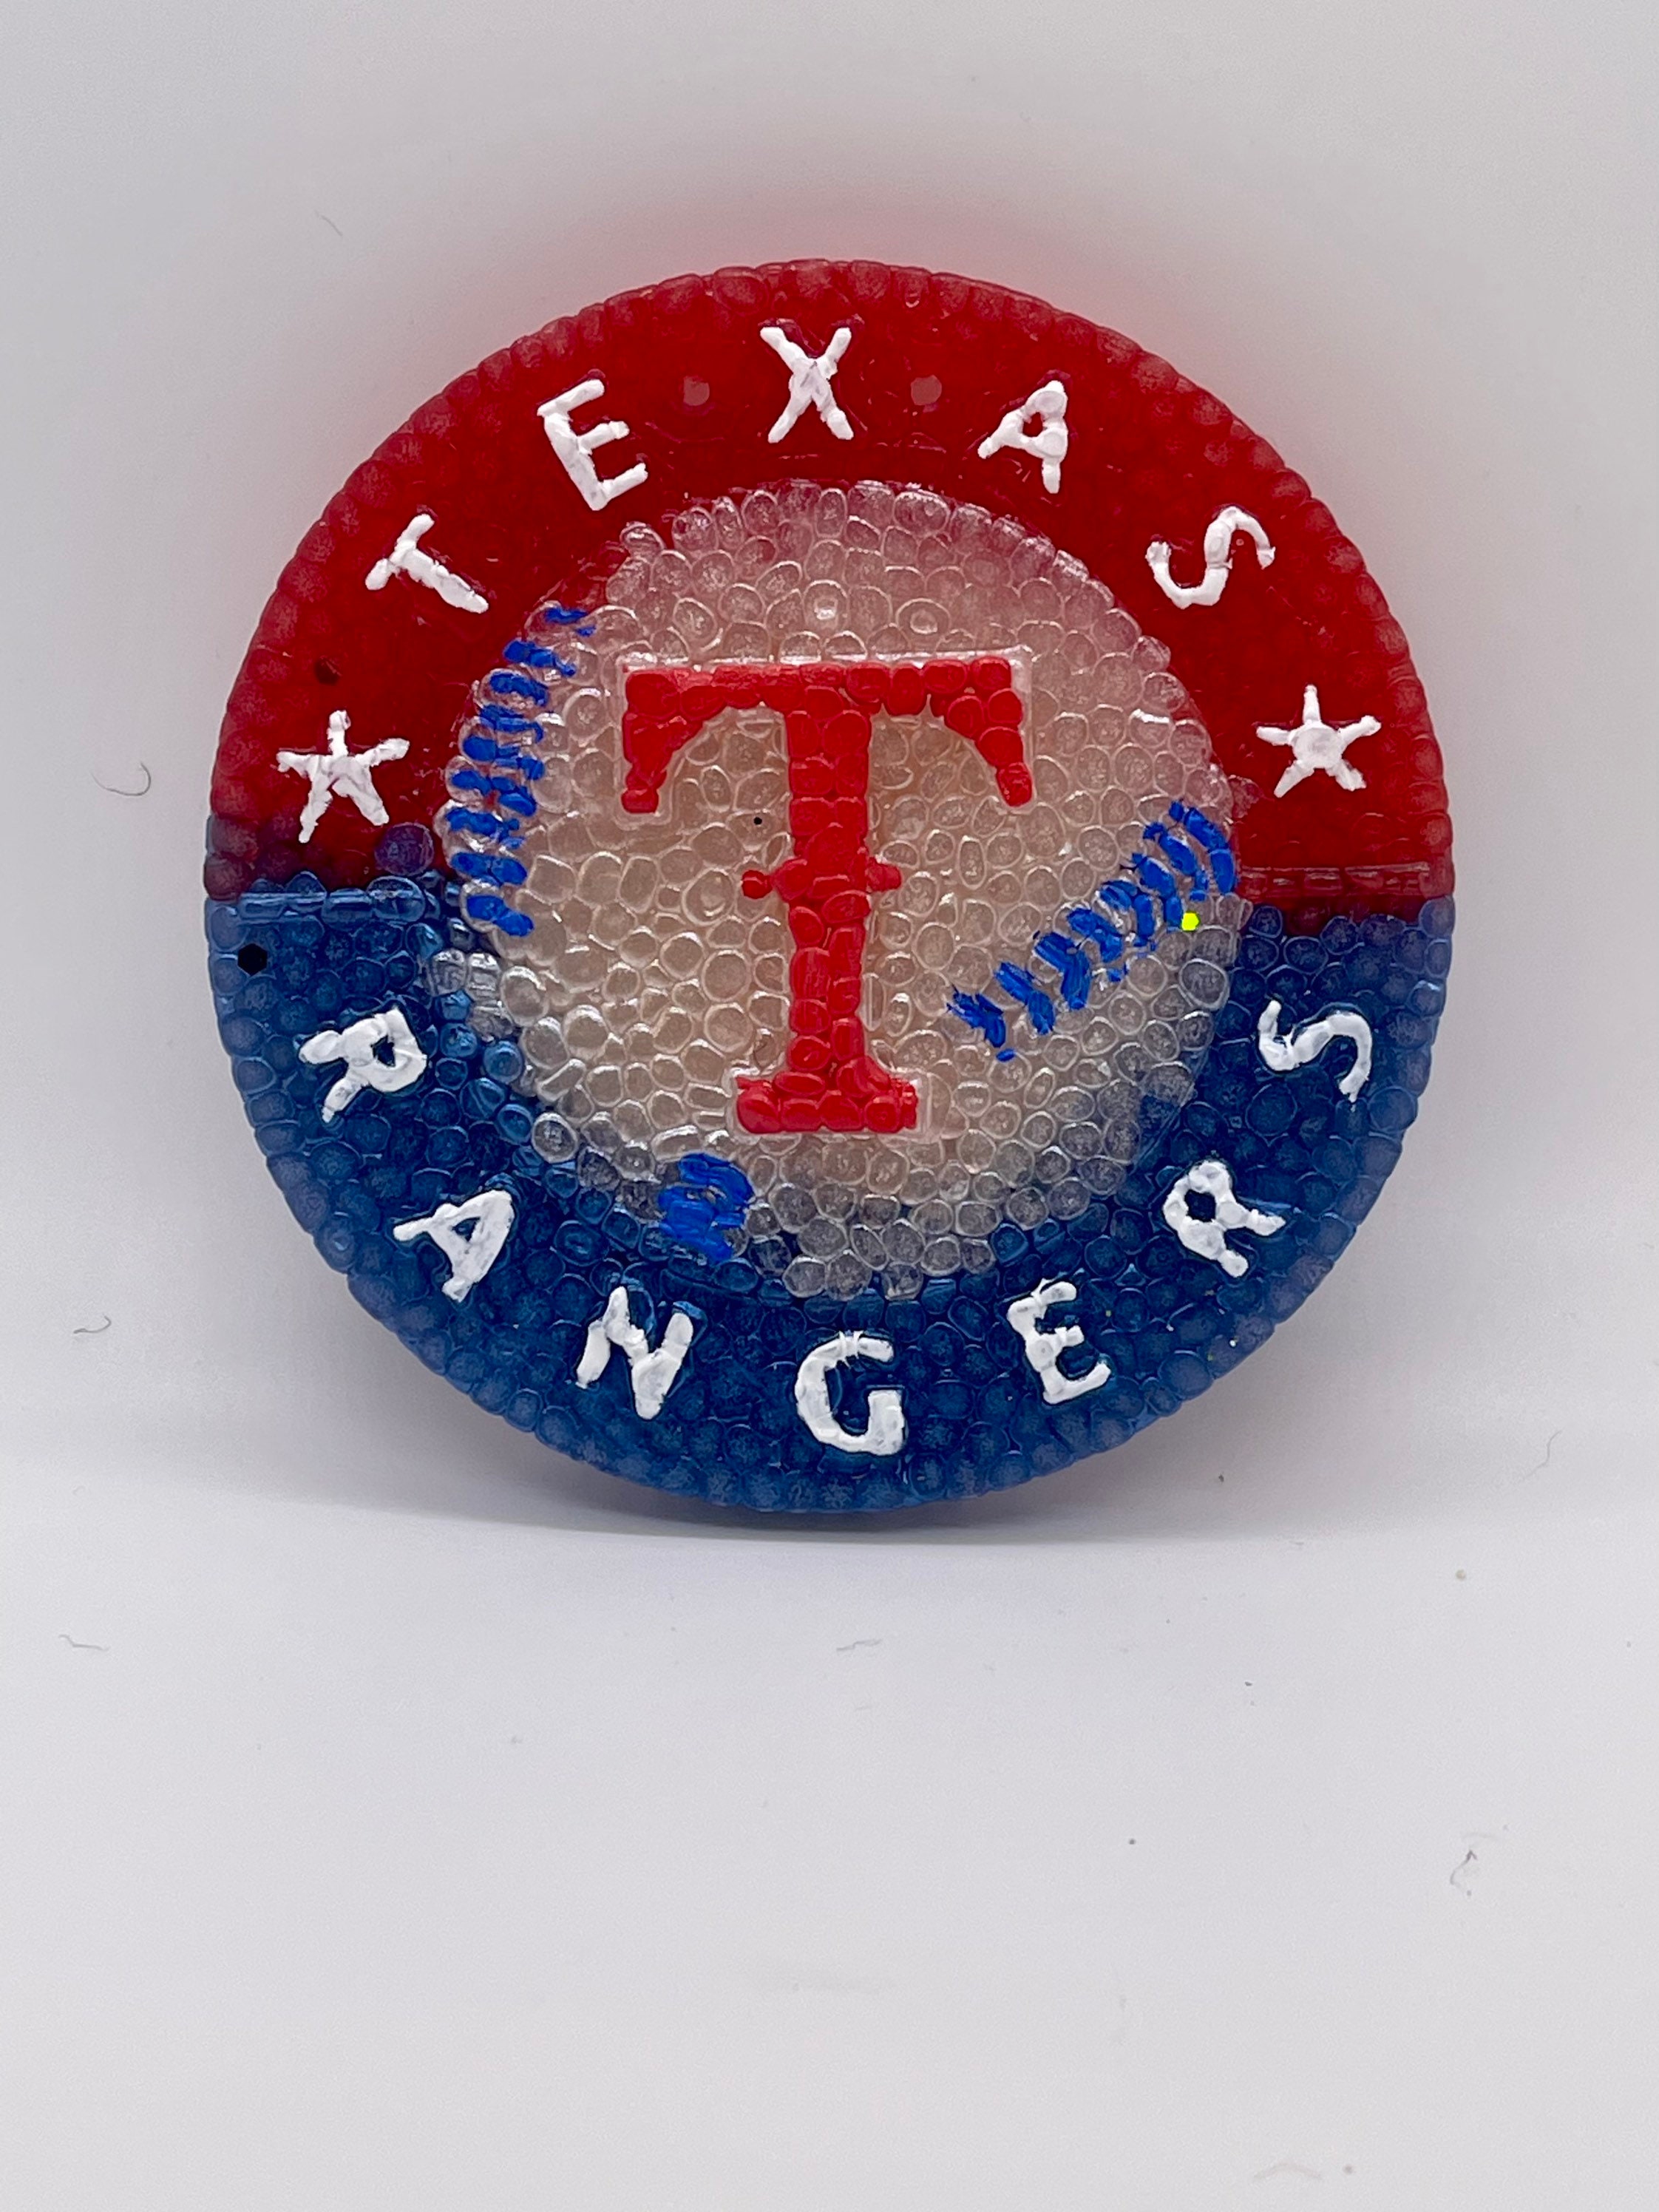 Personalized Texas Rangers Baseball Jersey w/ Bugs Bunny - Pullama